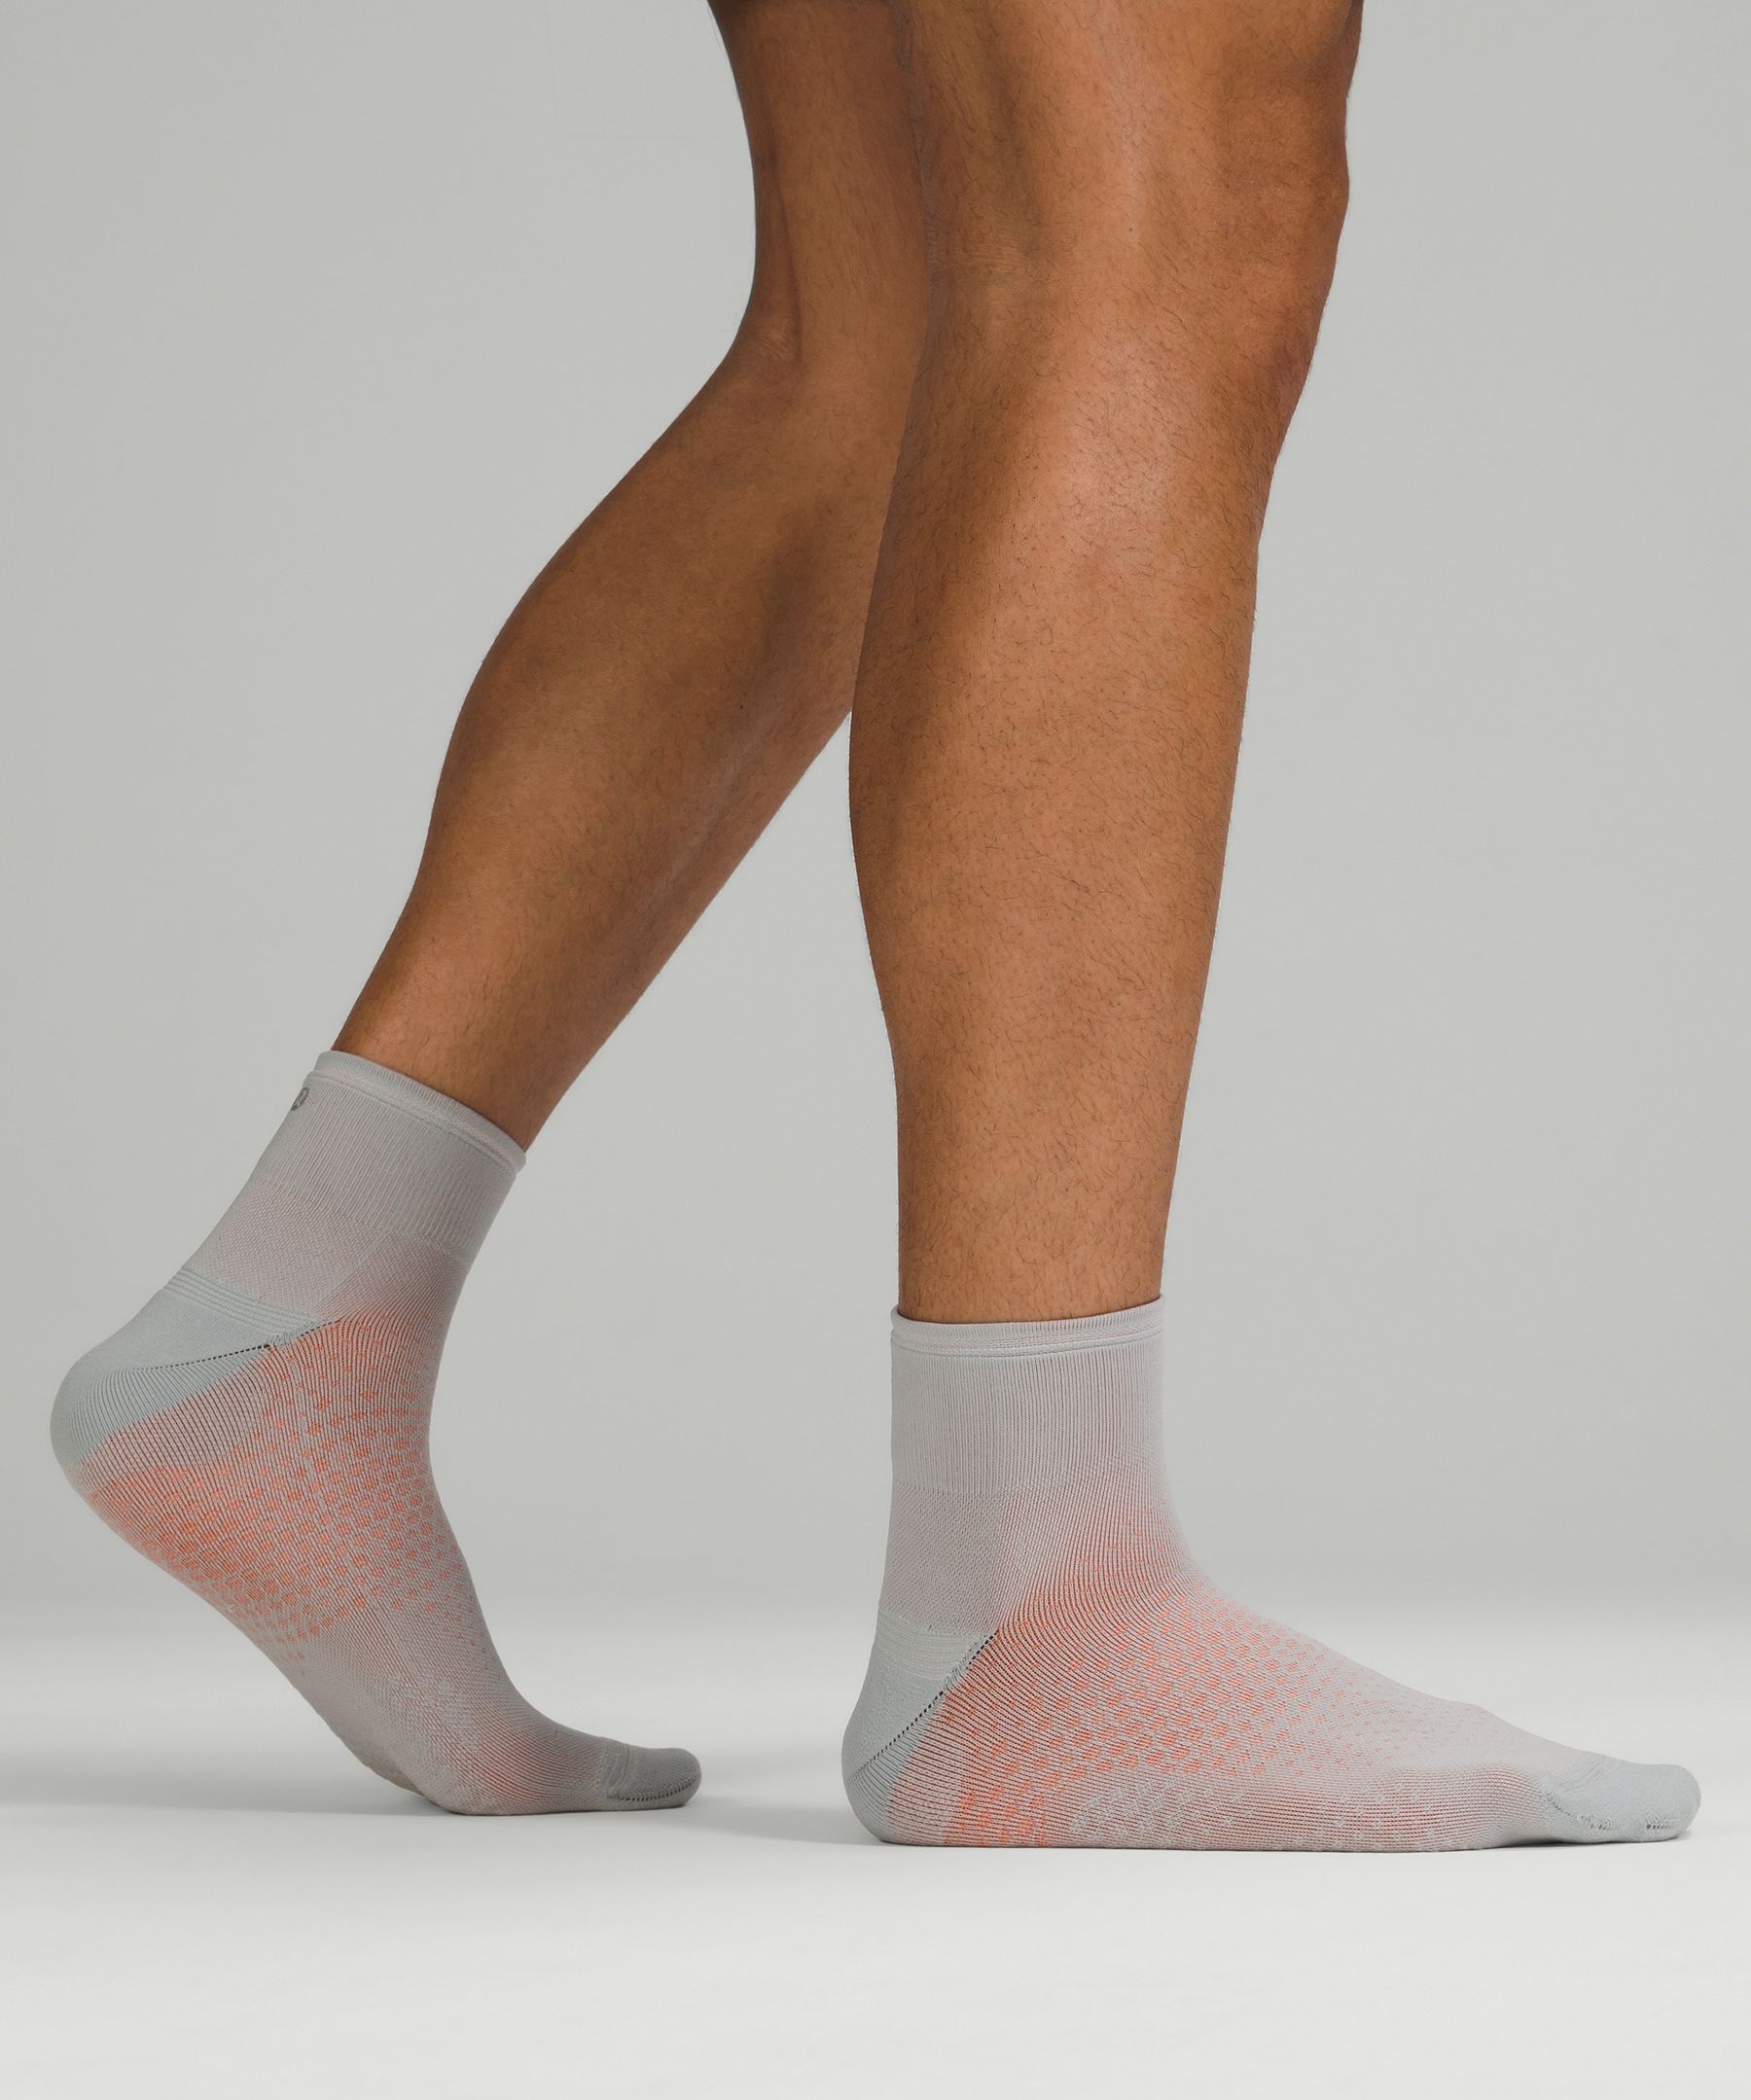 Mens athletic low cut Ankle sock oranges and lemons Fit Short Socks